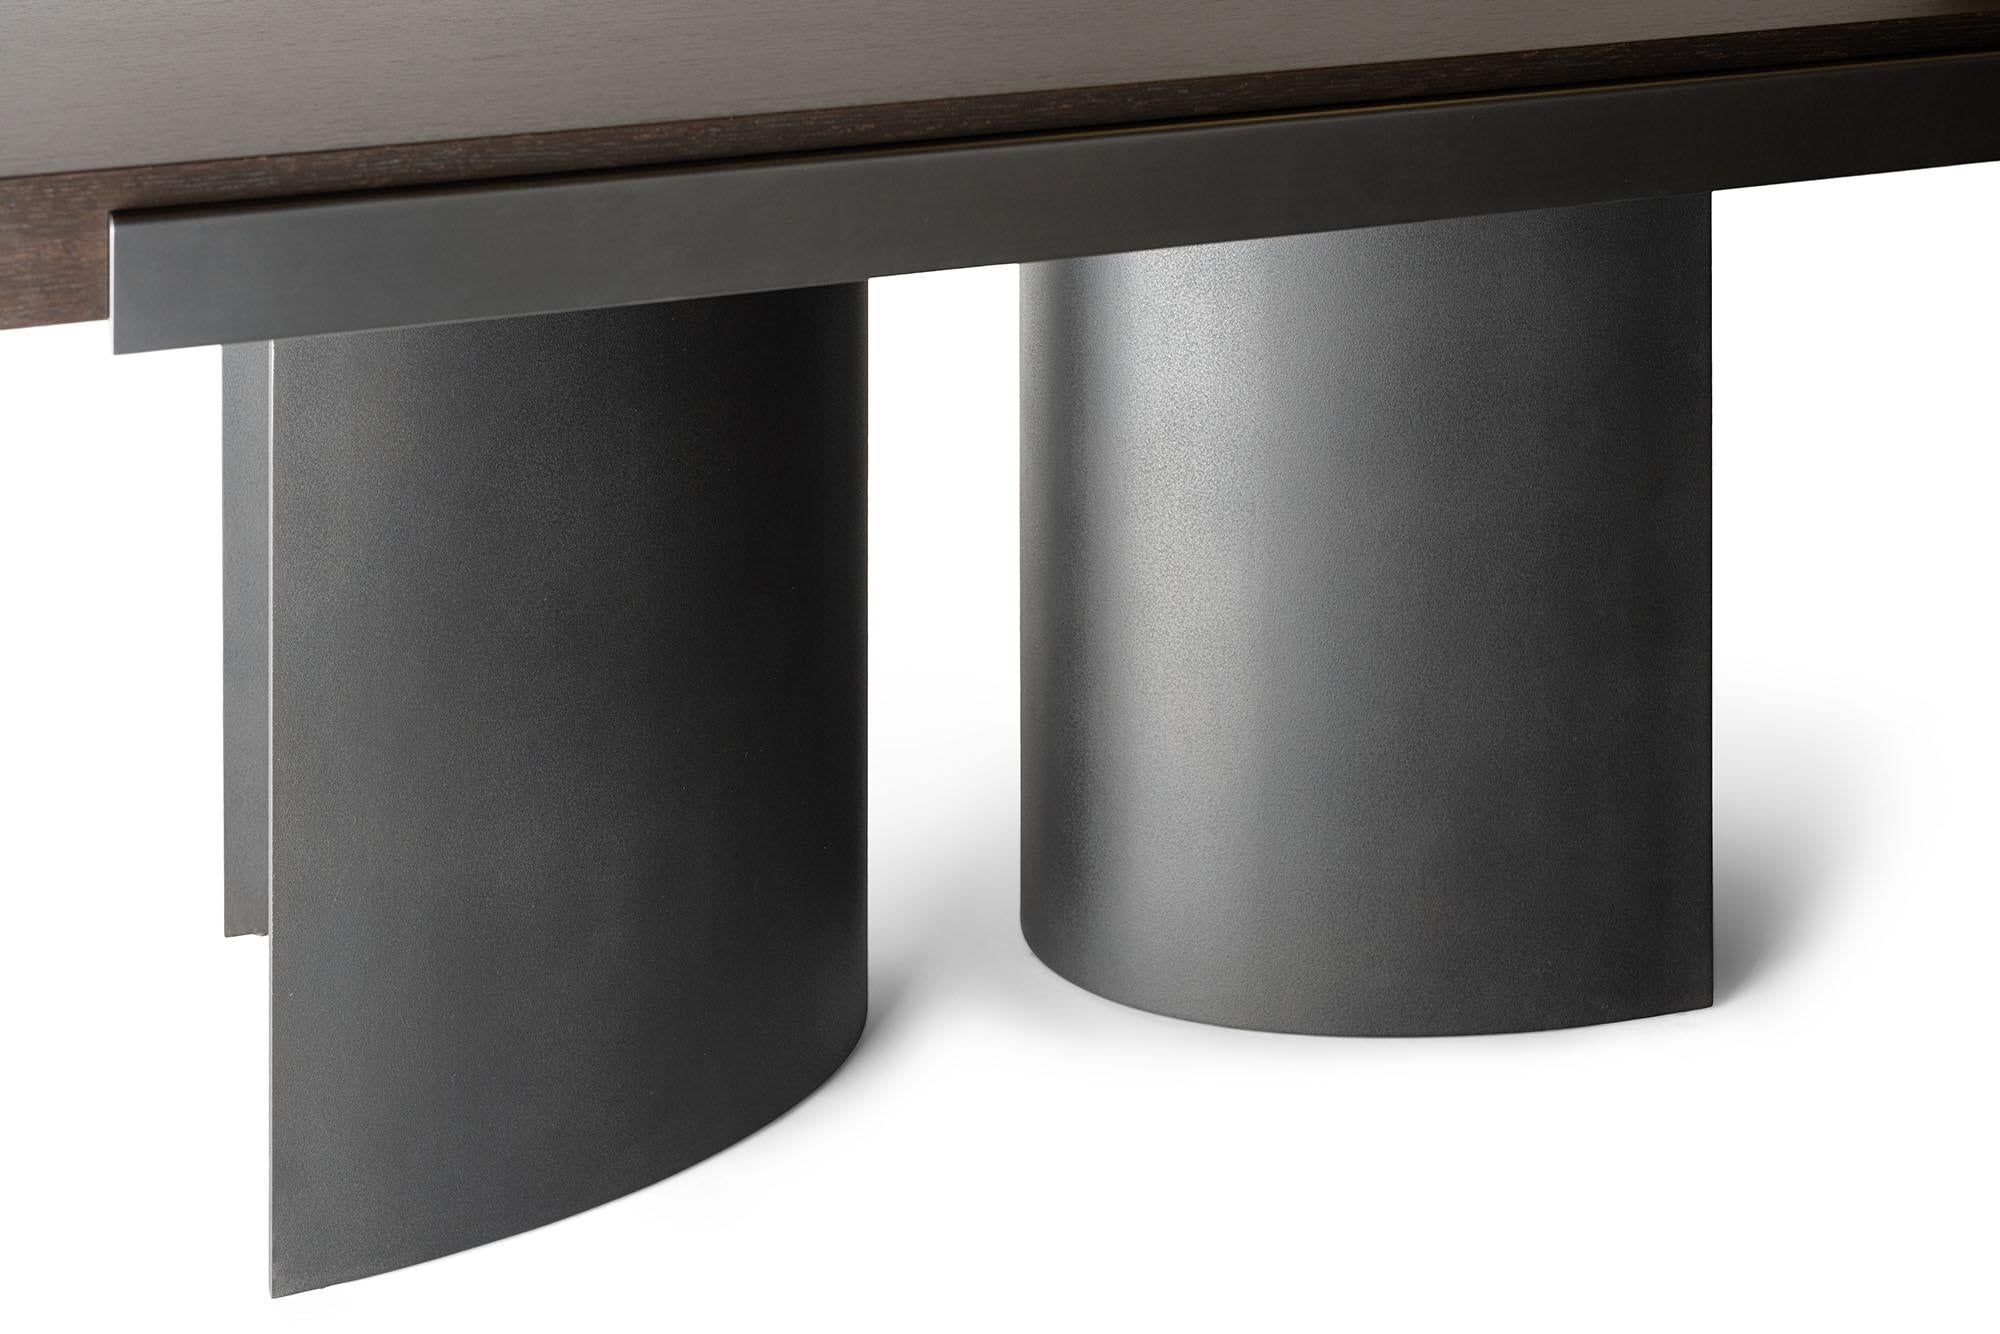 Luma Design Workshop Silo Grip Dining Table in Dark Wood and Dark Antique Metal For Sale 6